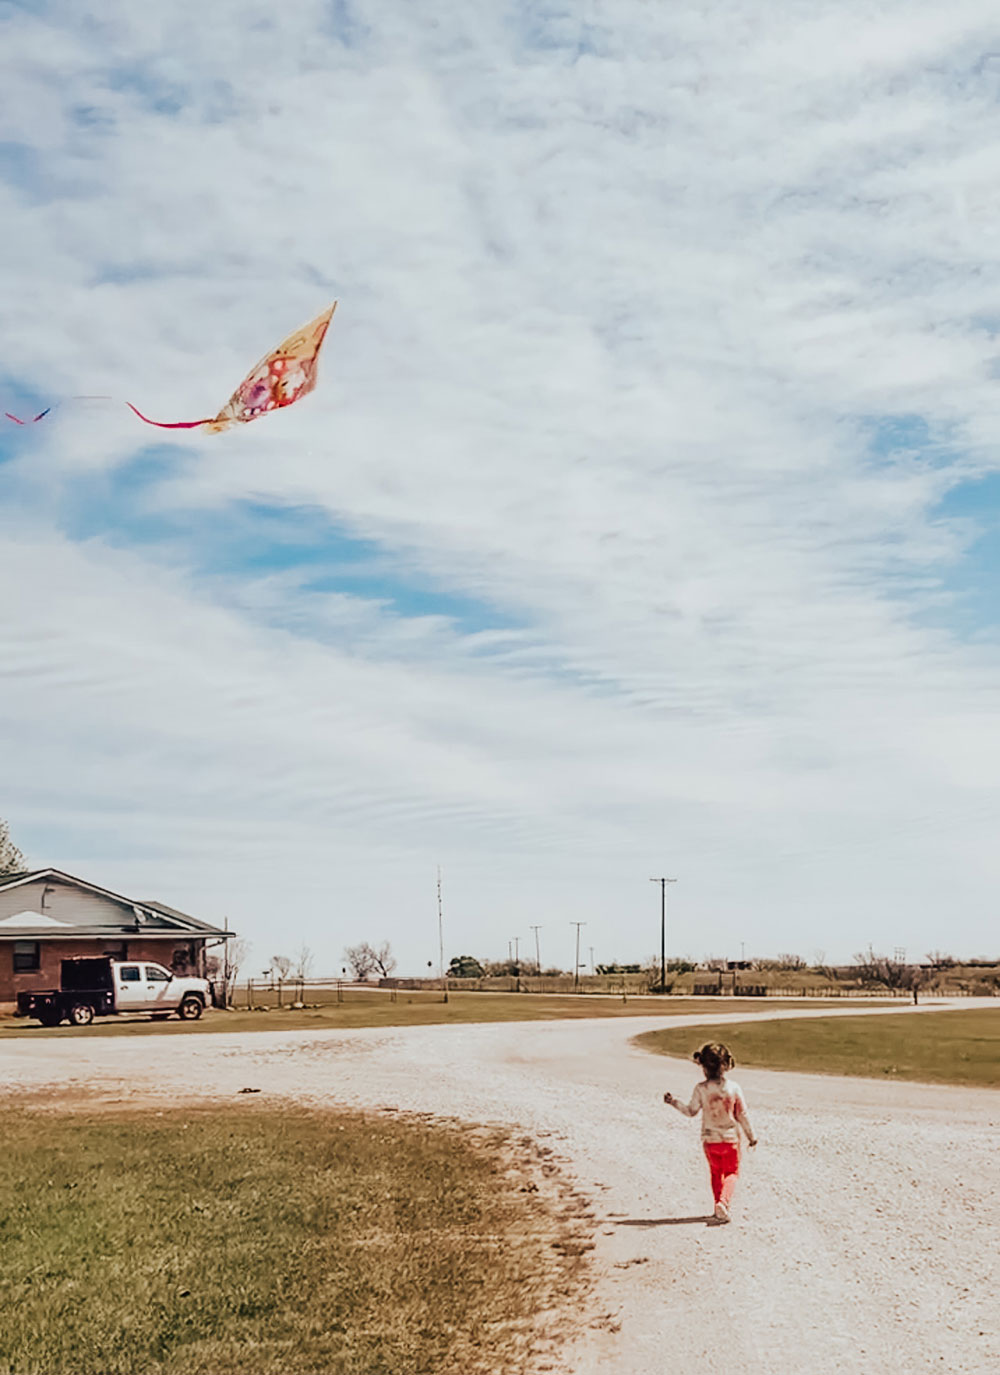 outdoor activity ideas - fly a kite